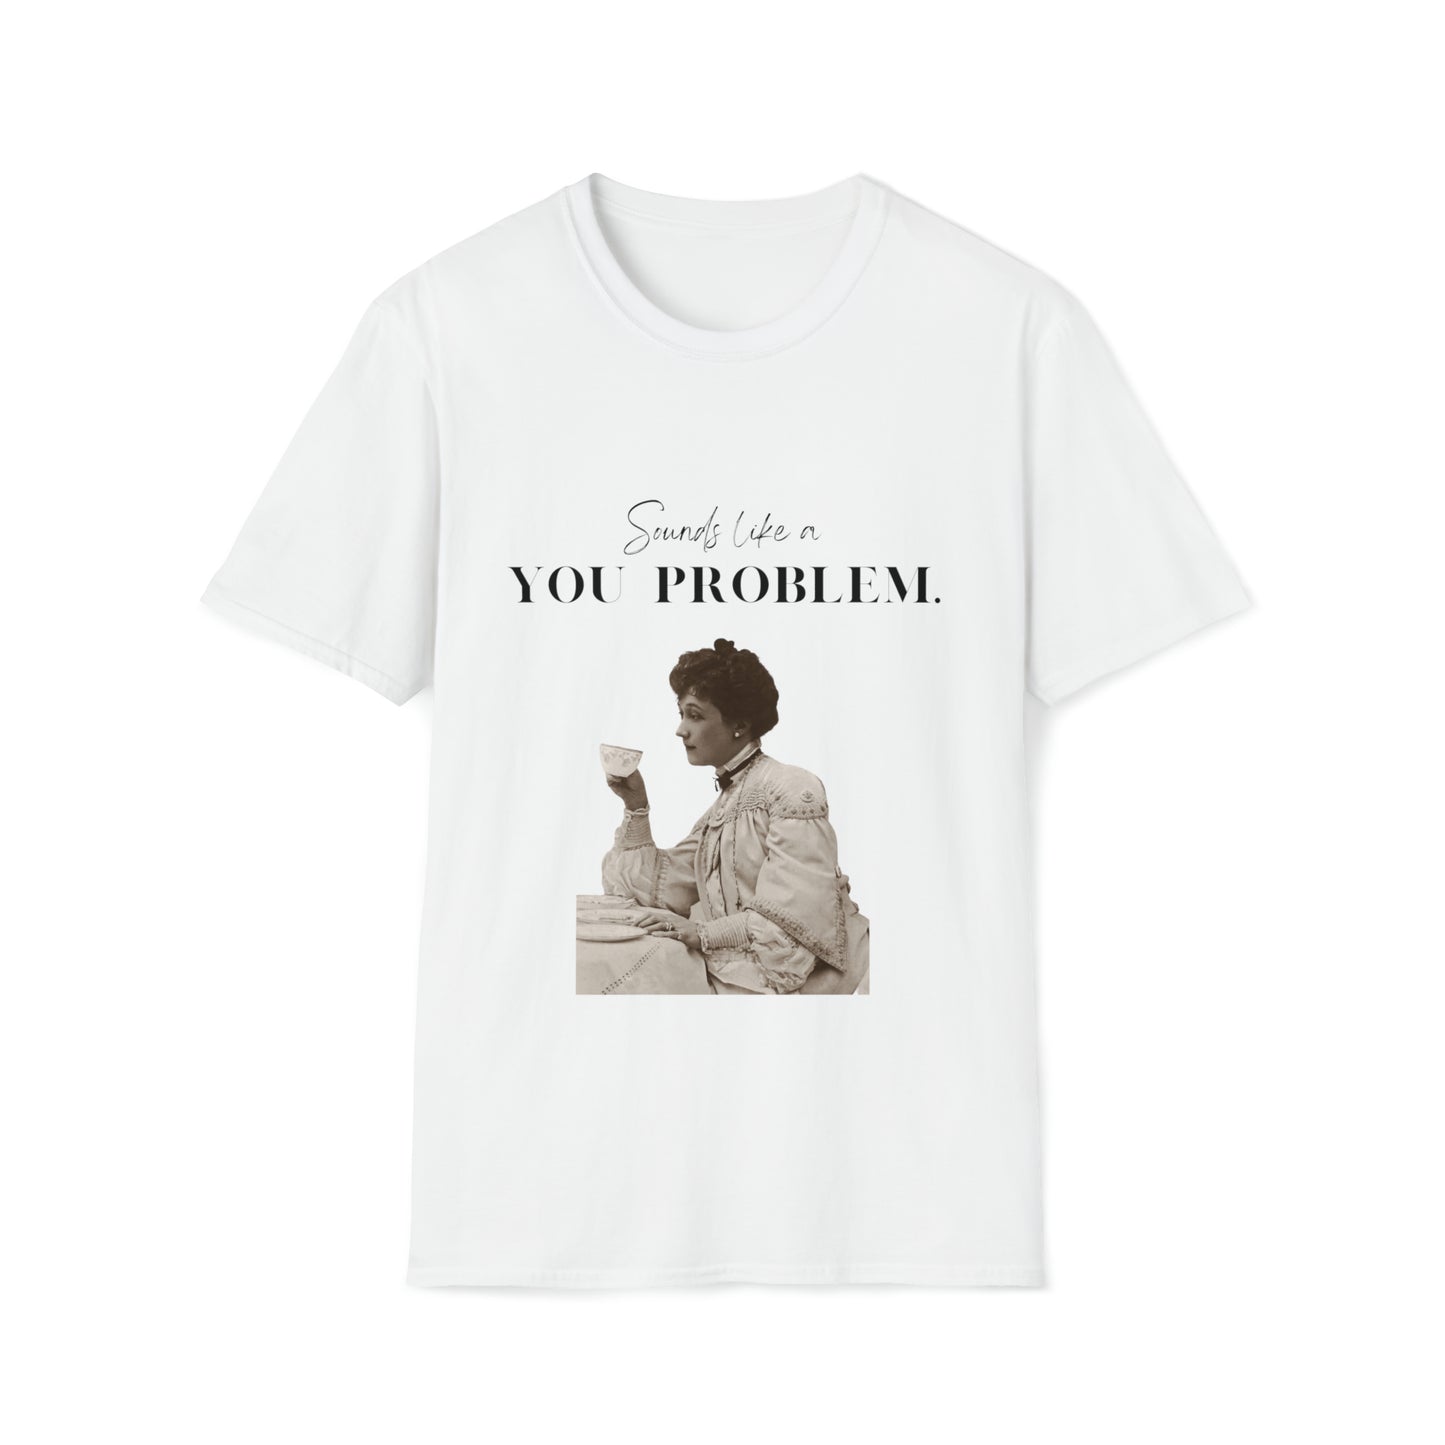 You Problem T-shirt